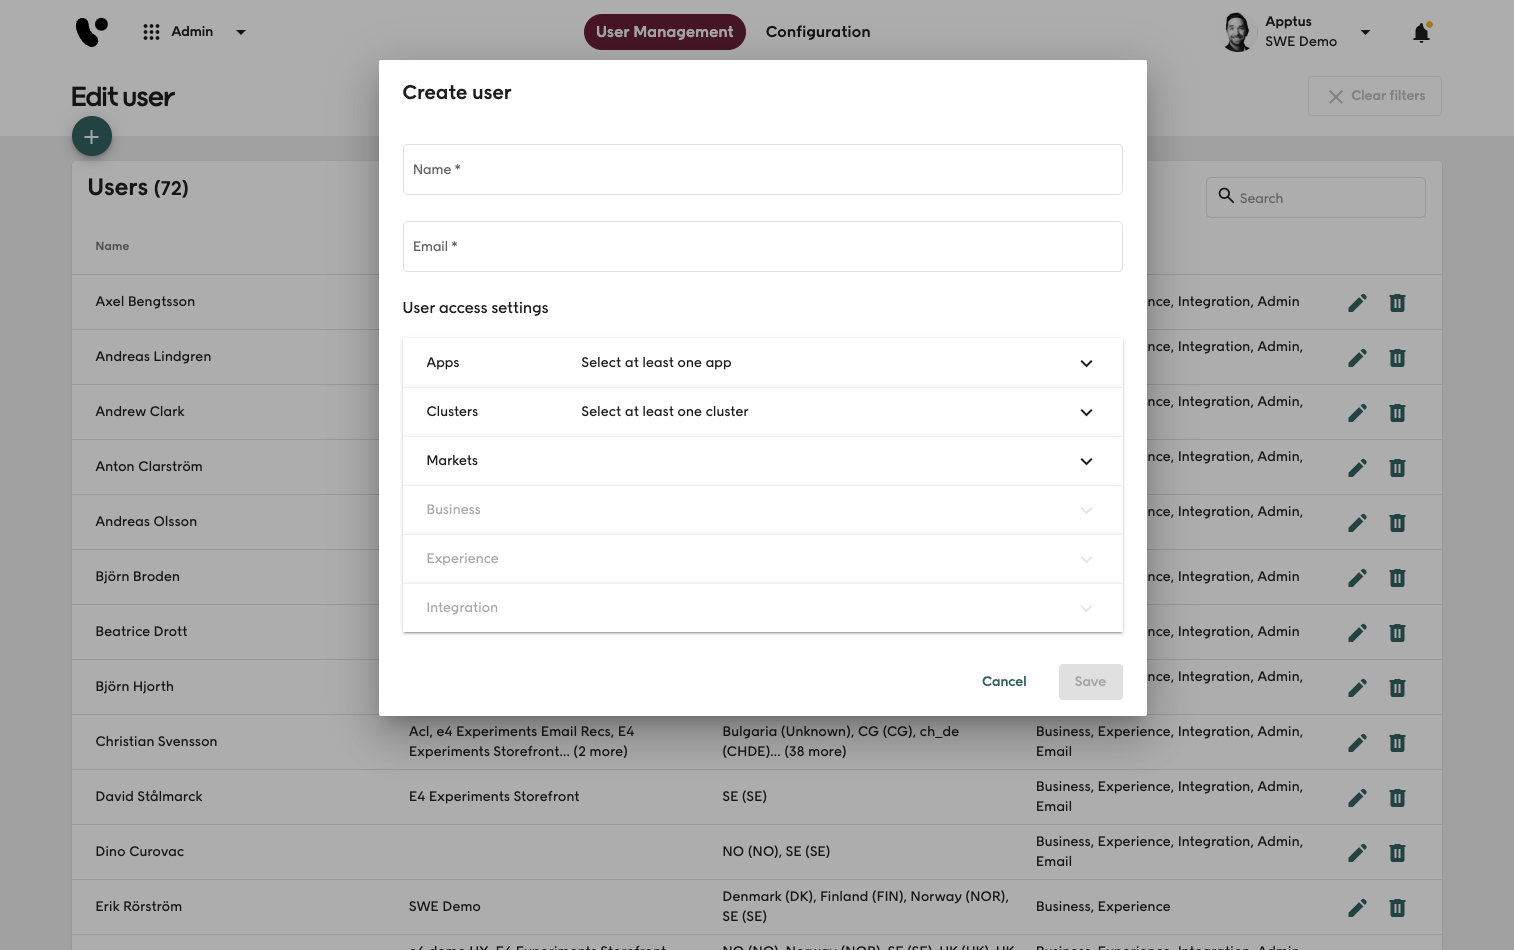 Screenshot of Voyado Elevate Admin app User management dialogue window